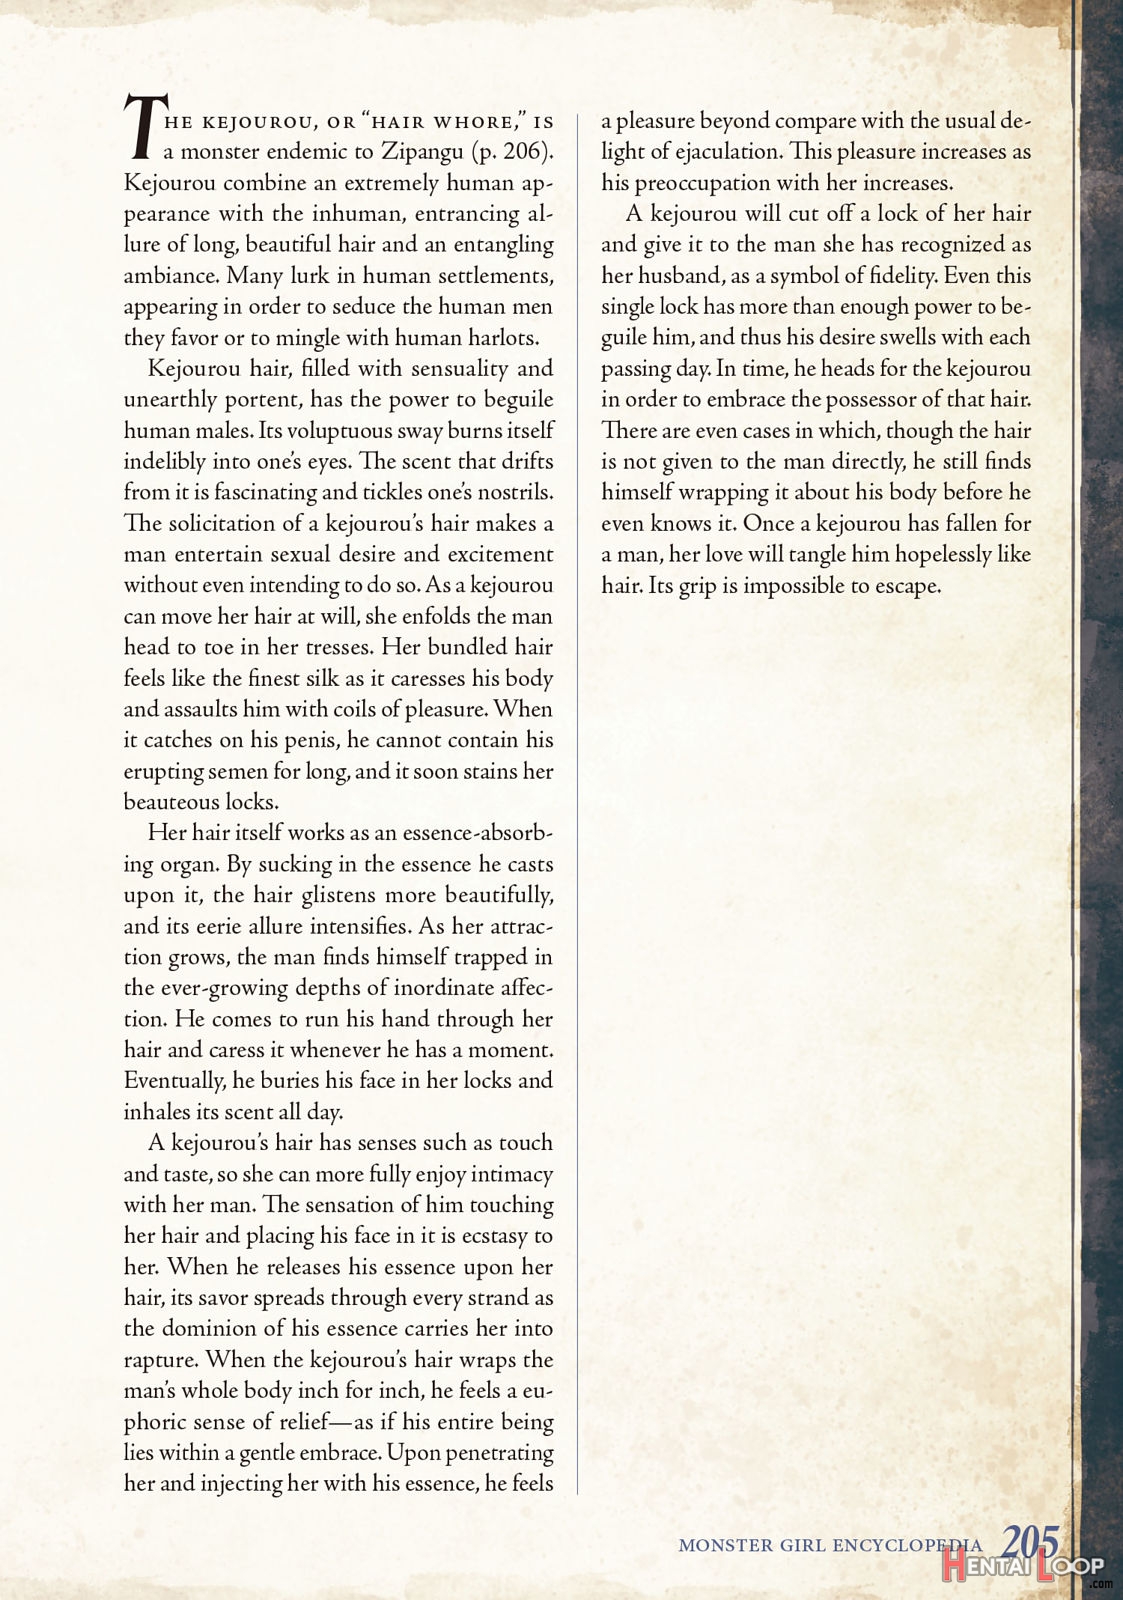 Monster Girl Encyclopedia Vol. 2 page 206